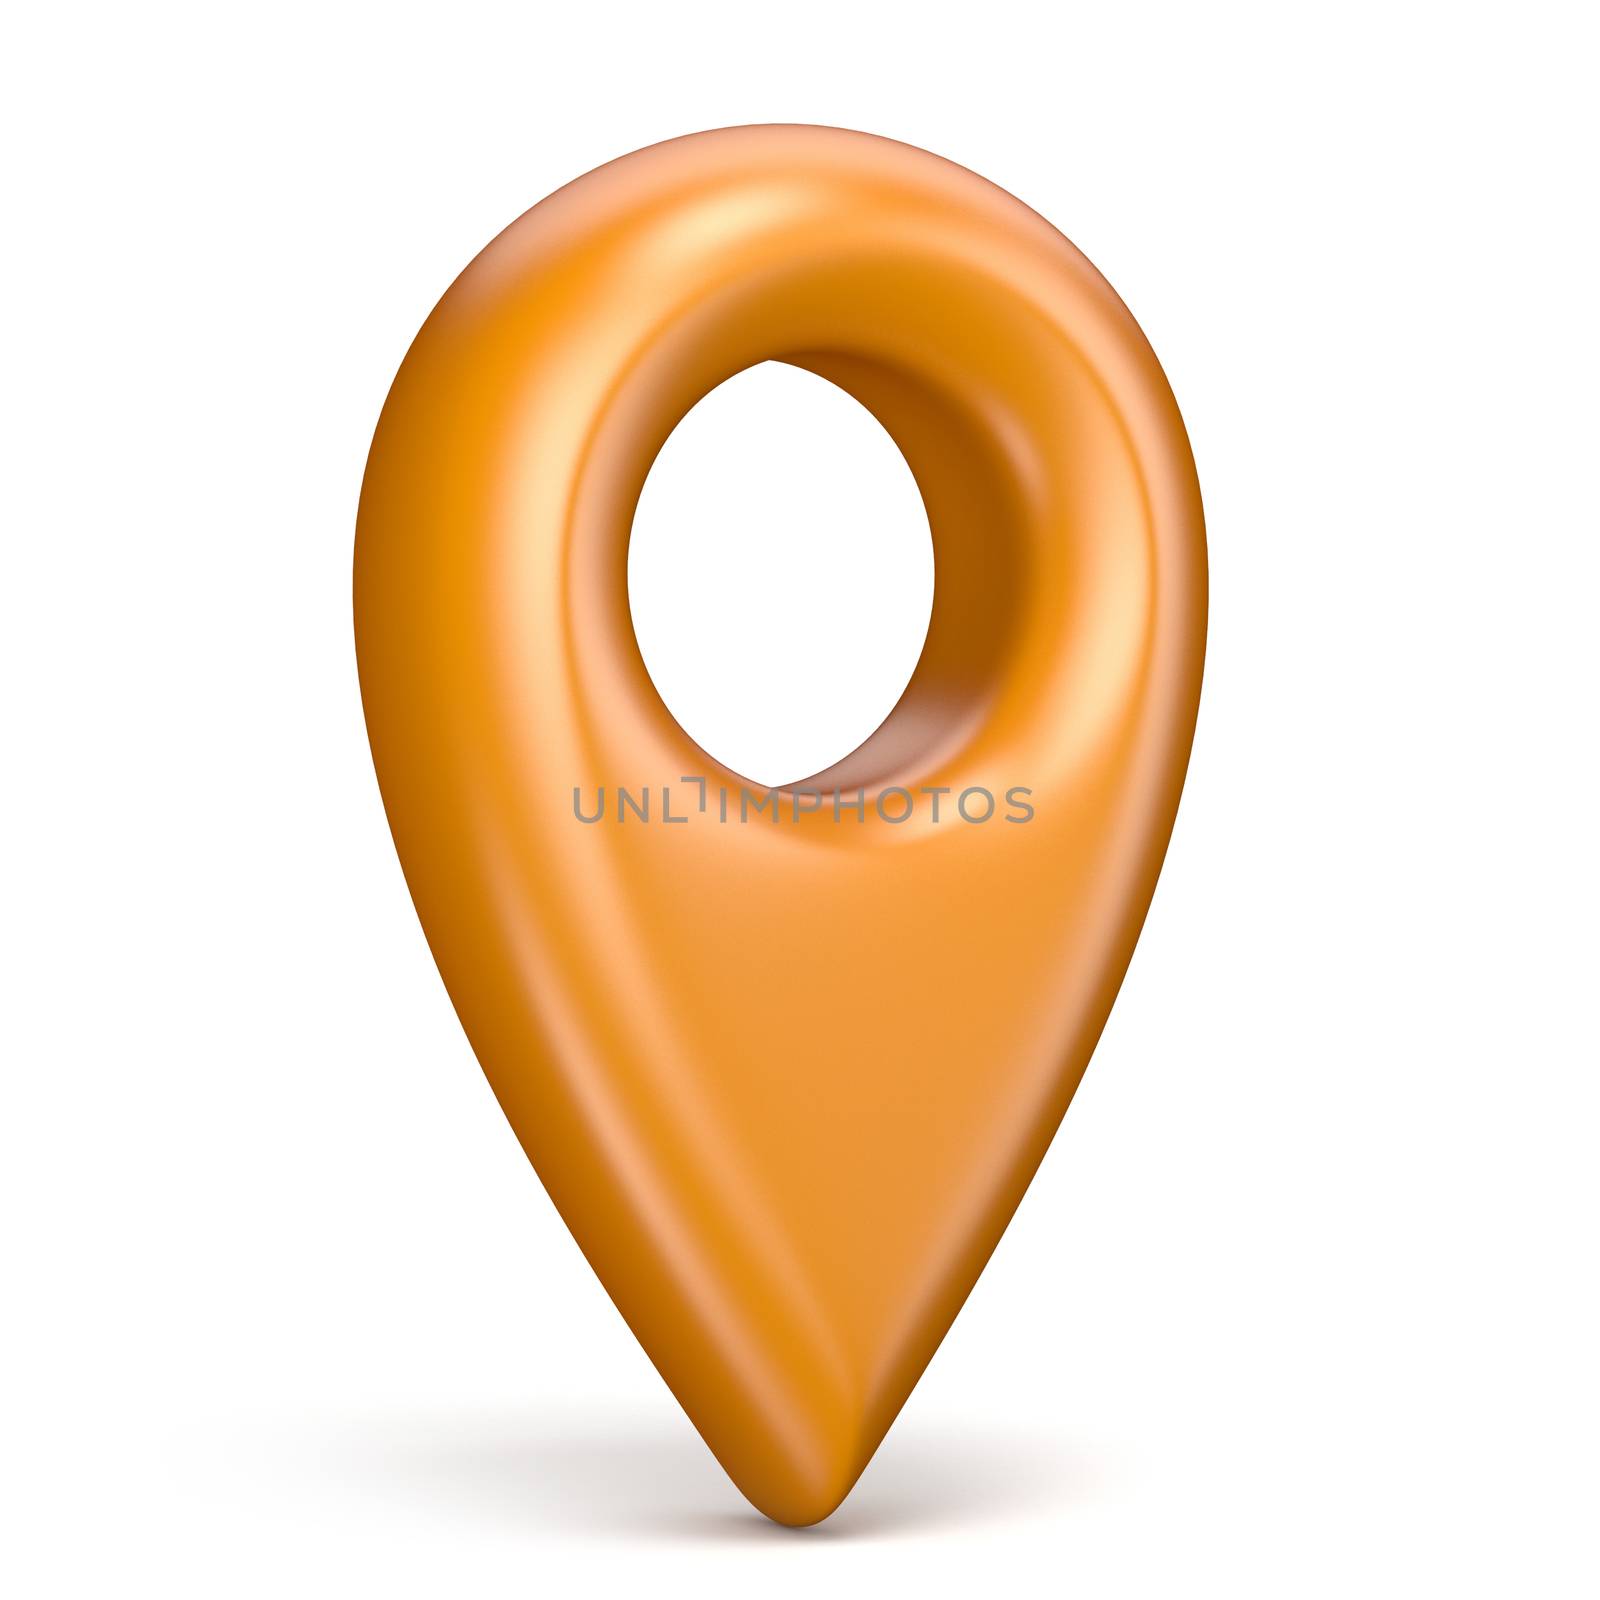 Orange map pointer 3D render illustration isolated on white background